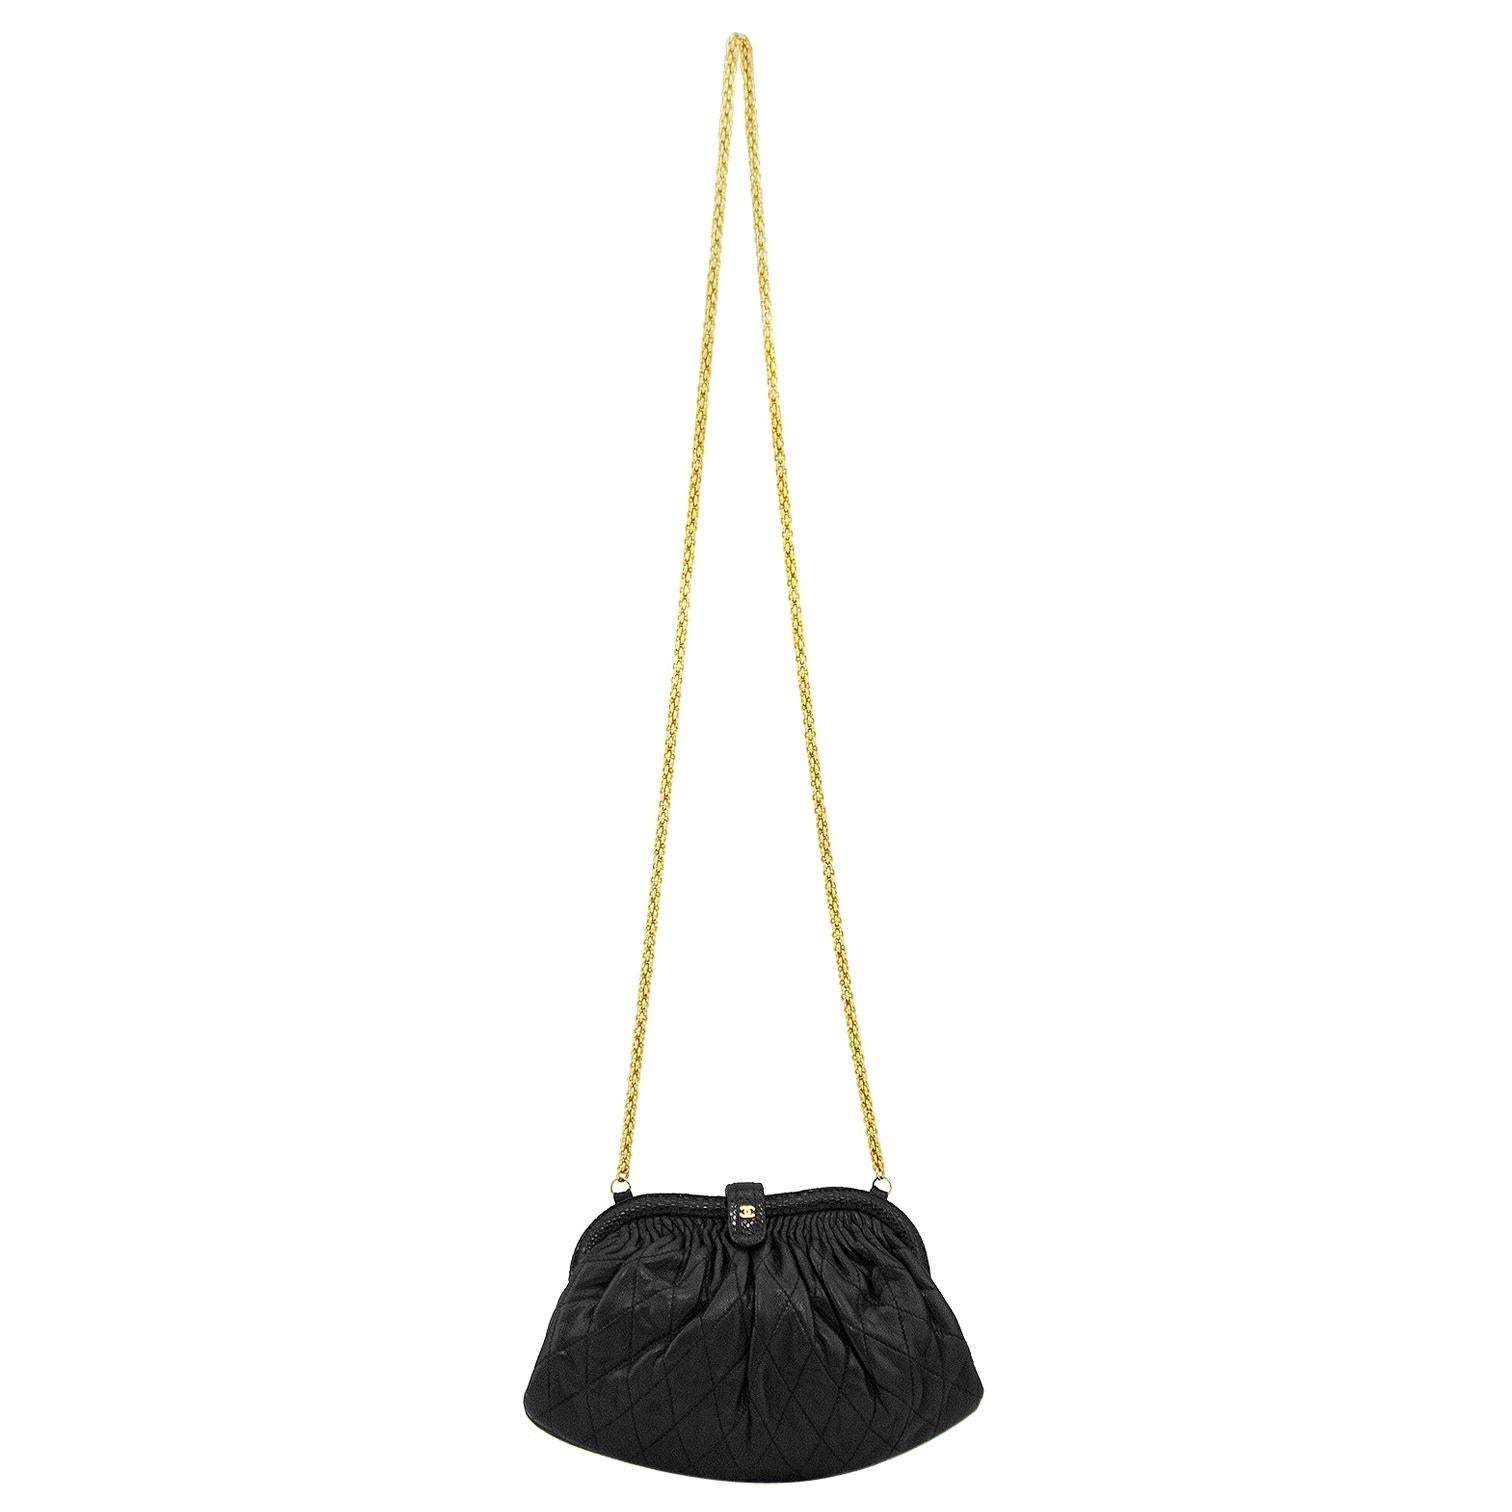 1980s Chanel Black Quilted Frame Evening Bag